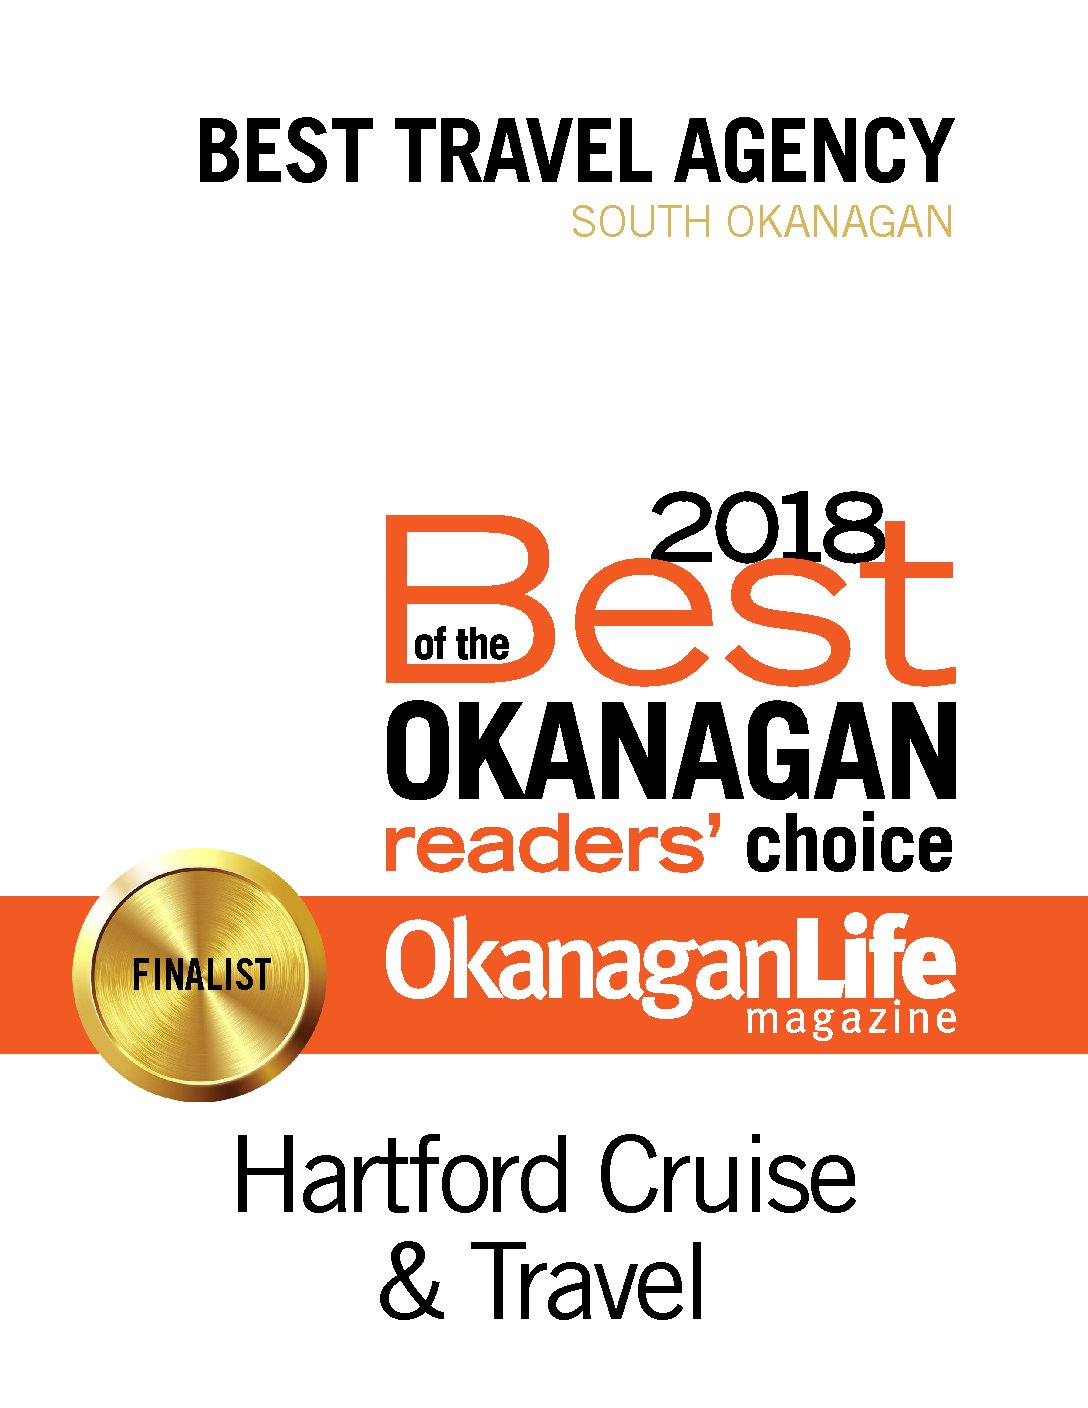 Hartford Cruise & Travel